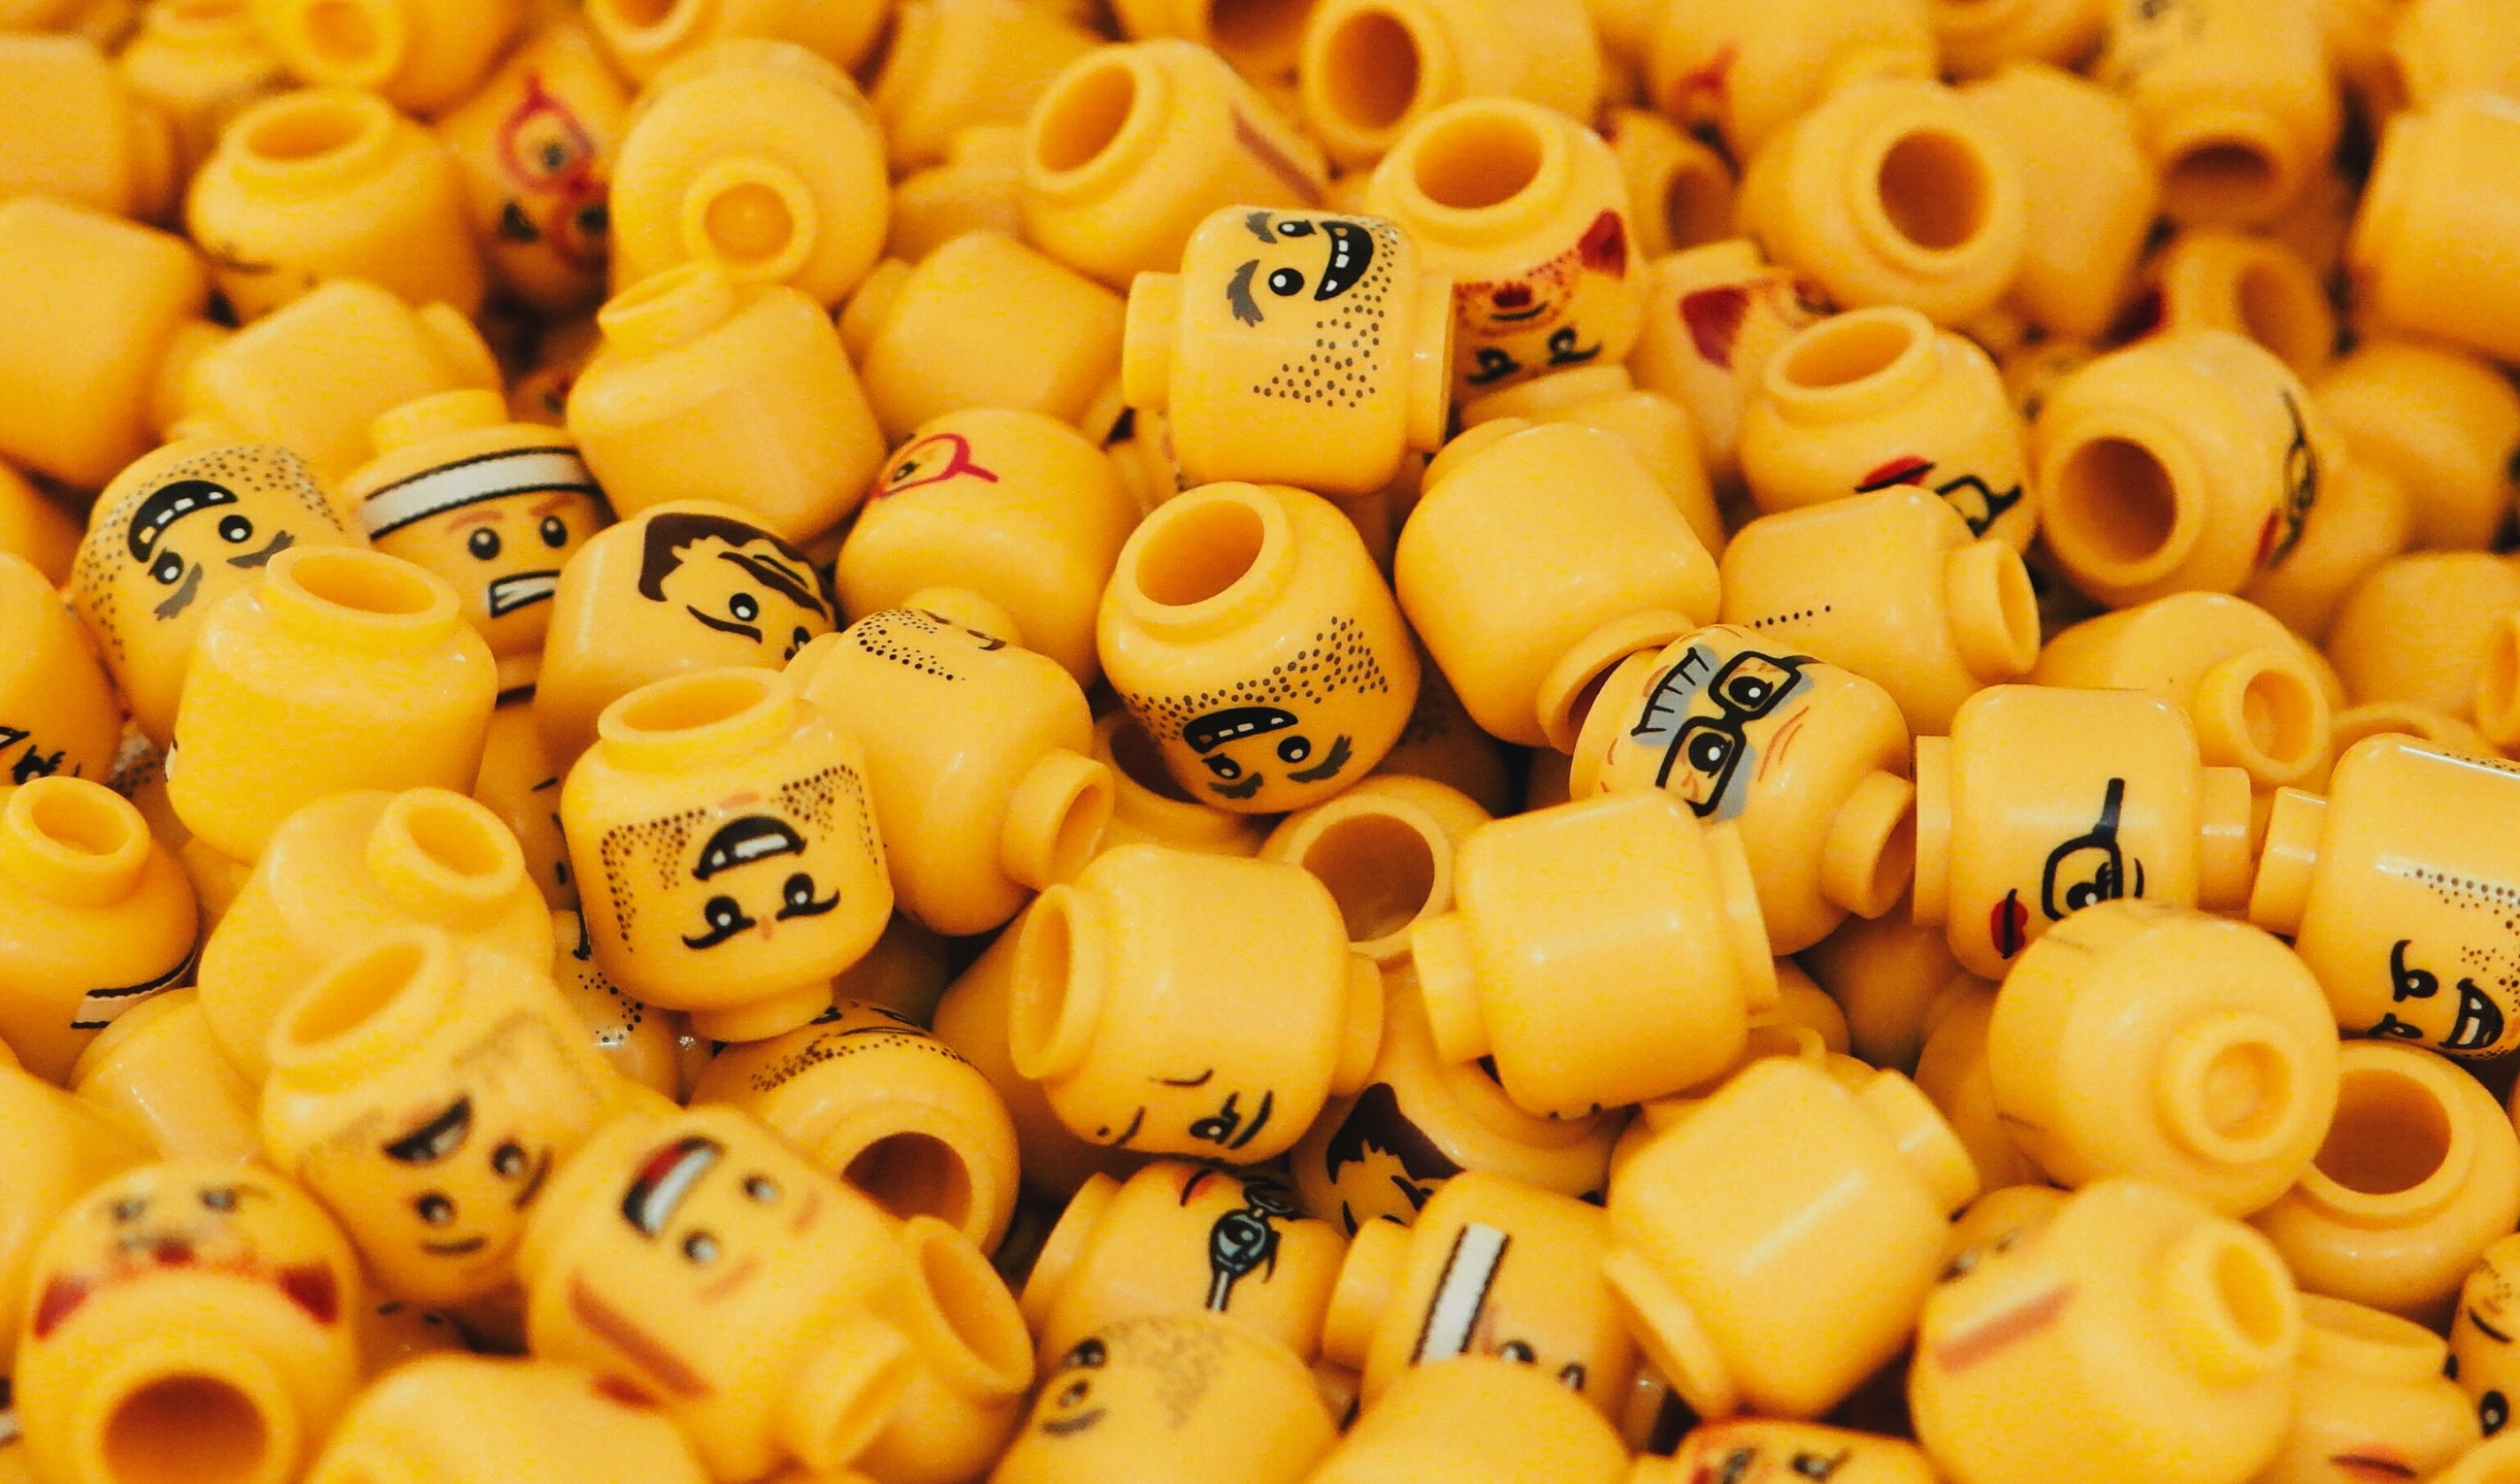 Lego has embraced randomization